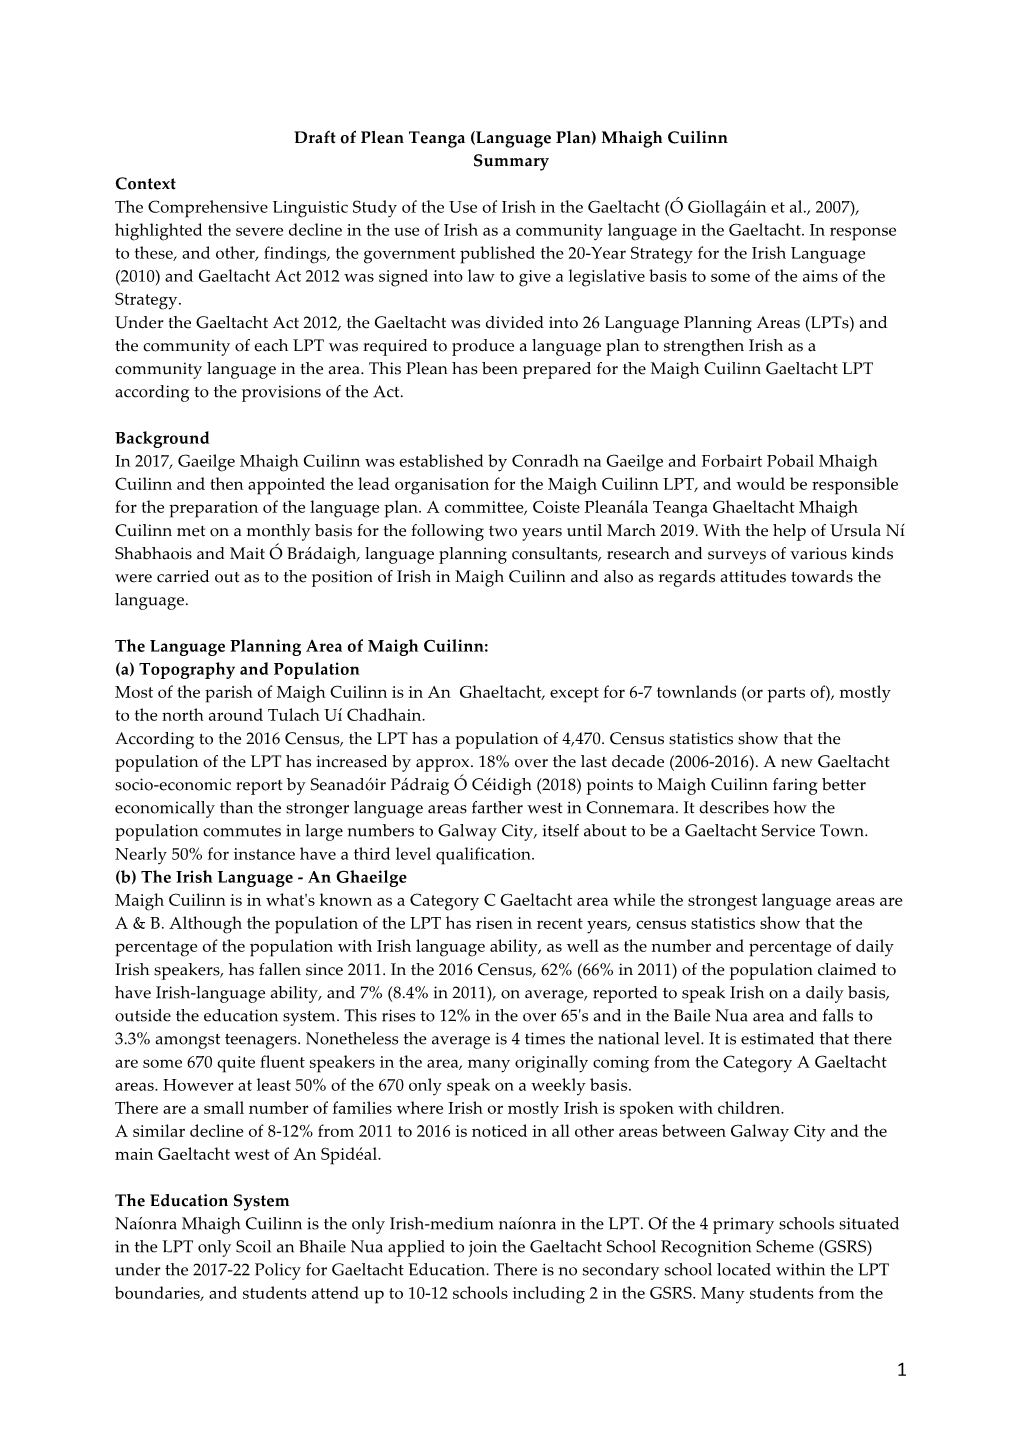 Draft of Plean Teanga (Language Plan) Mhaigh Cuilinn Summary